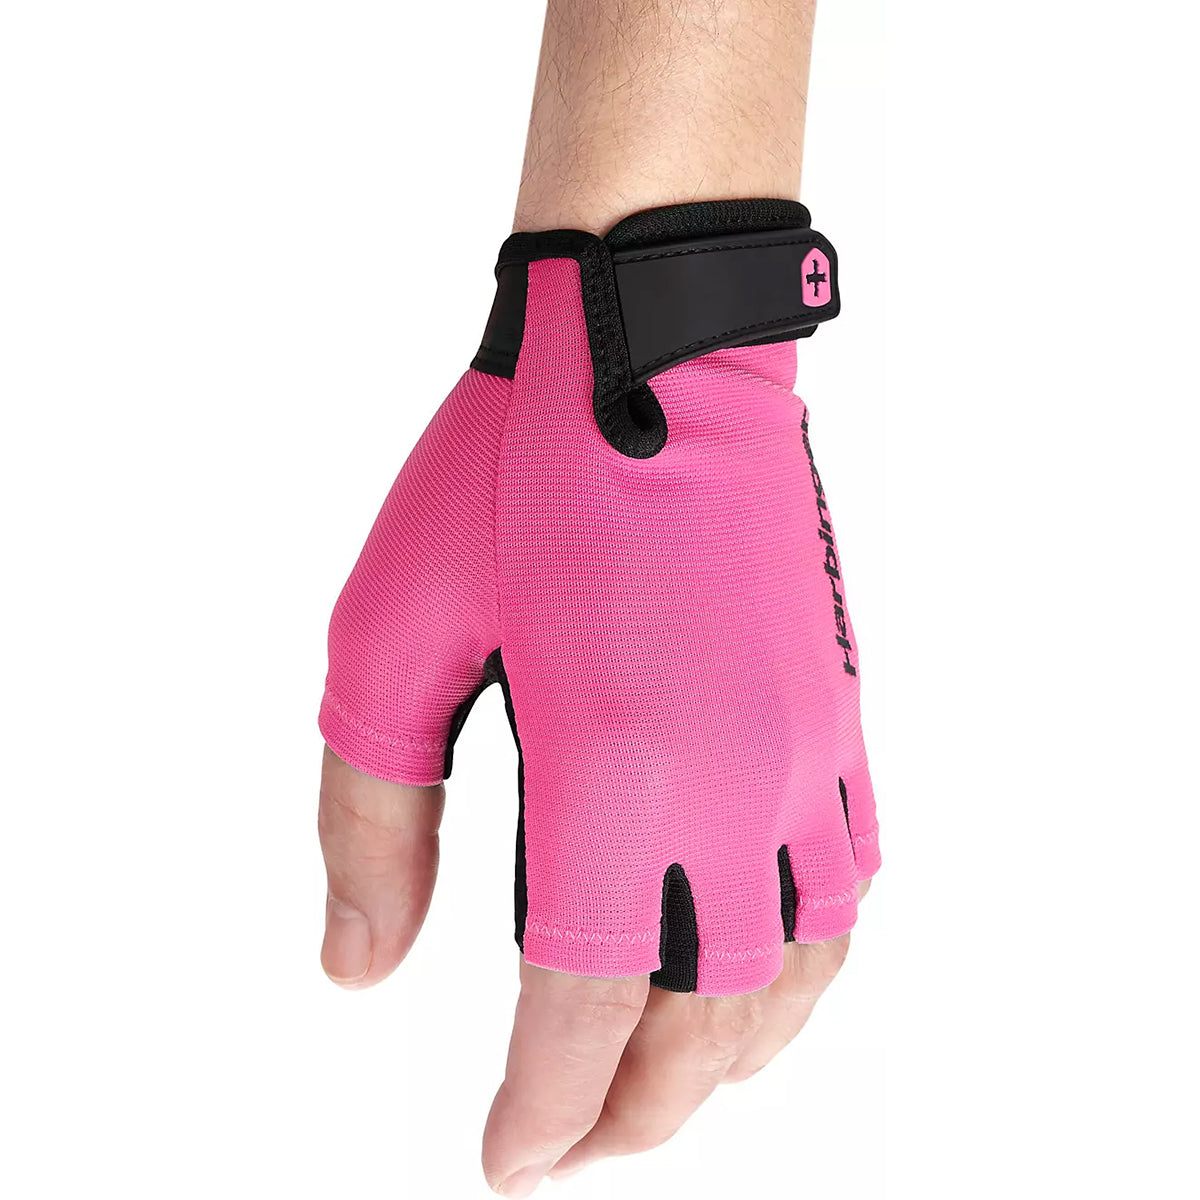 Harbinger Unisex Power Weight Lifting Gloves - Pink Harbinger